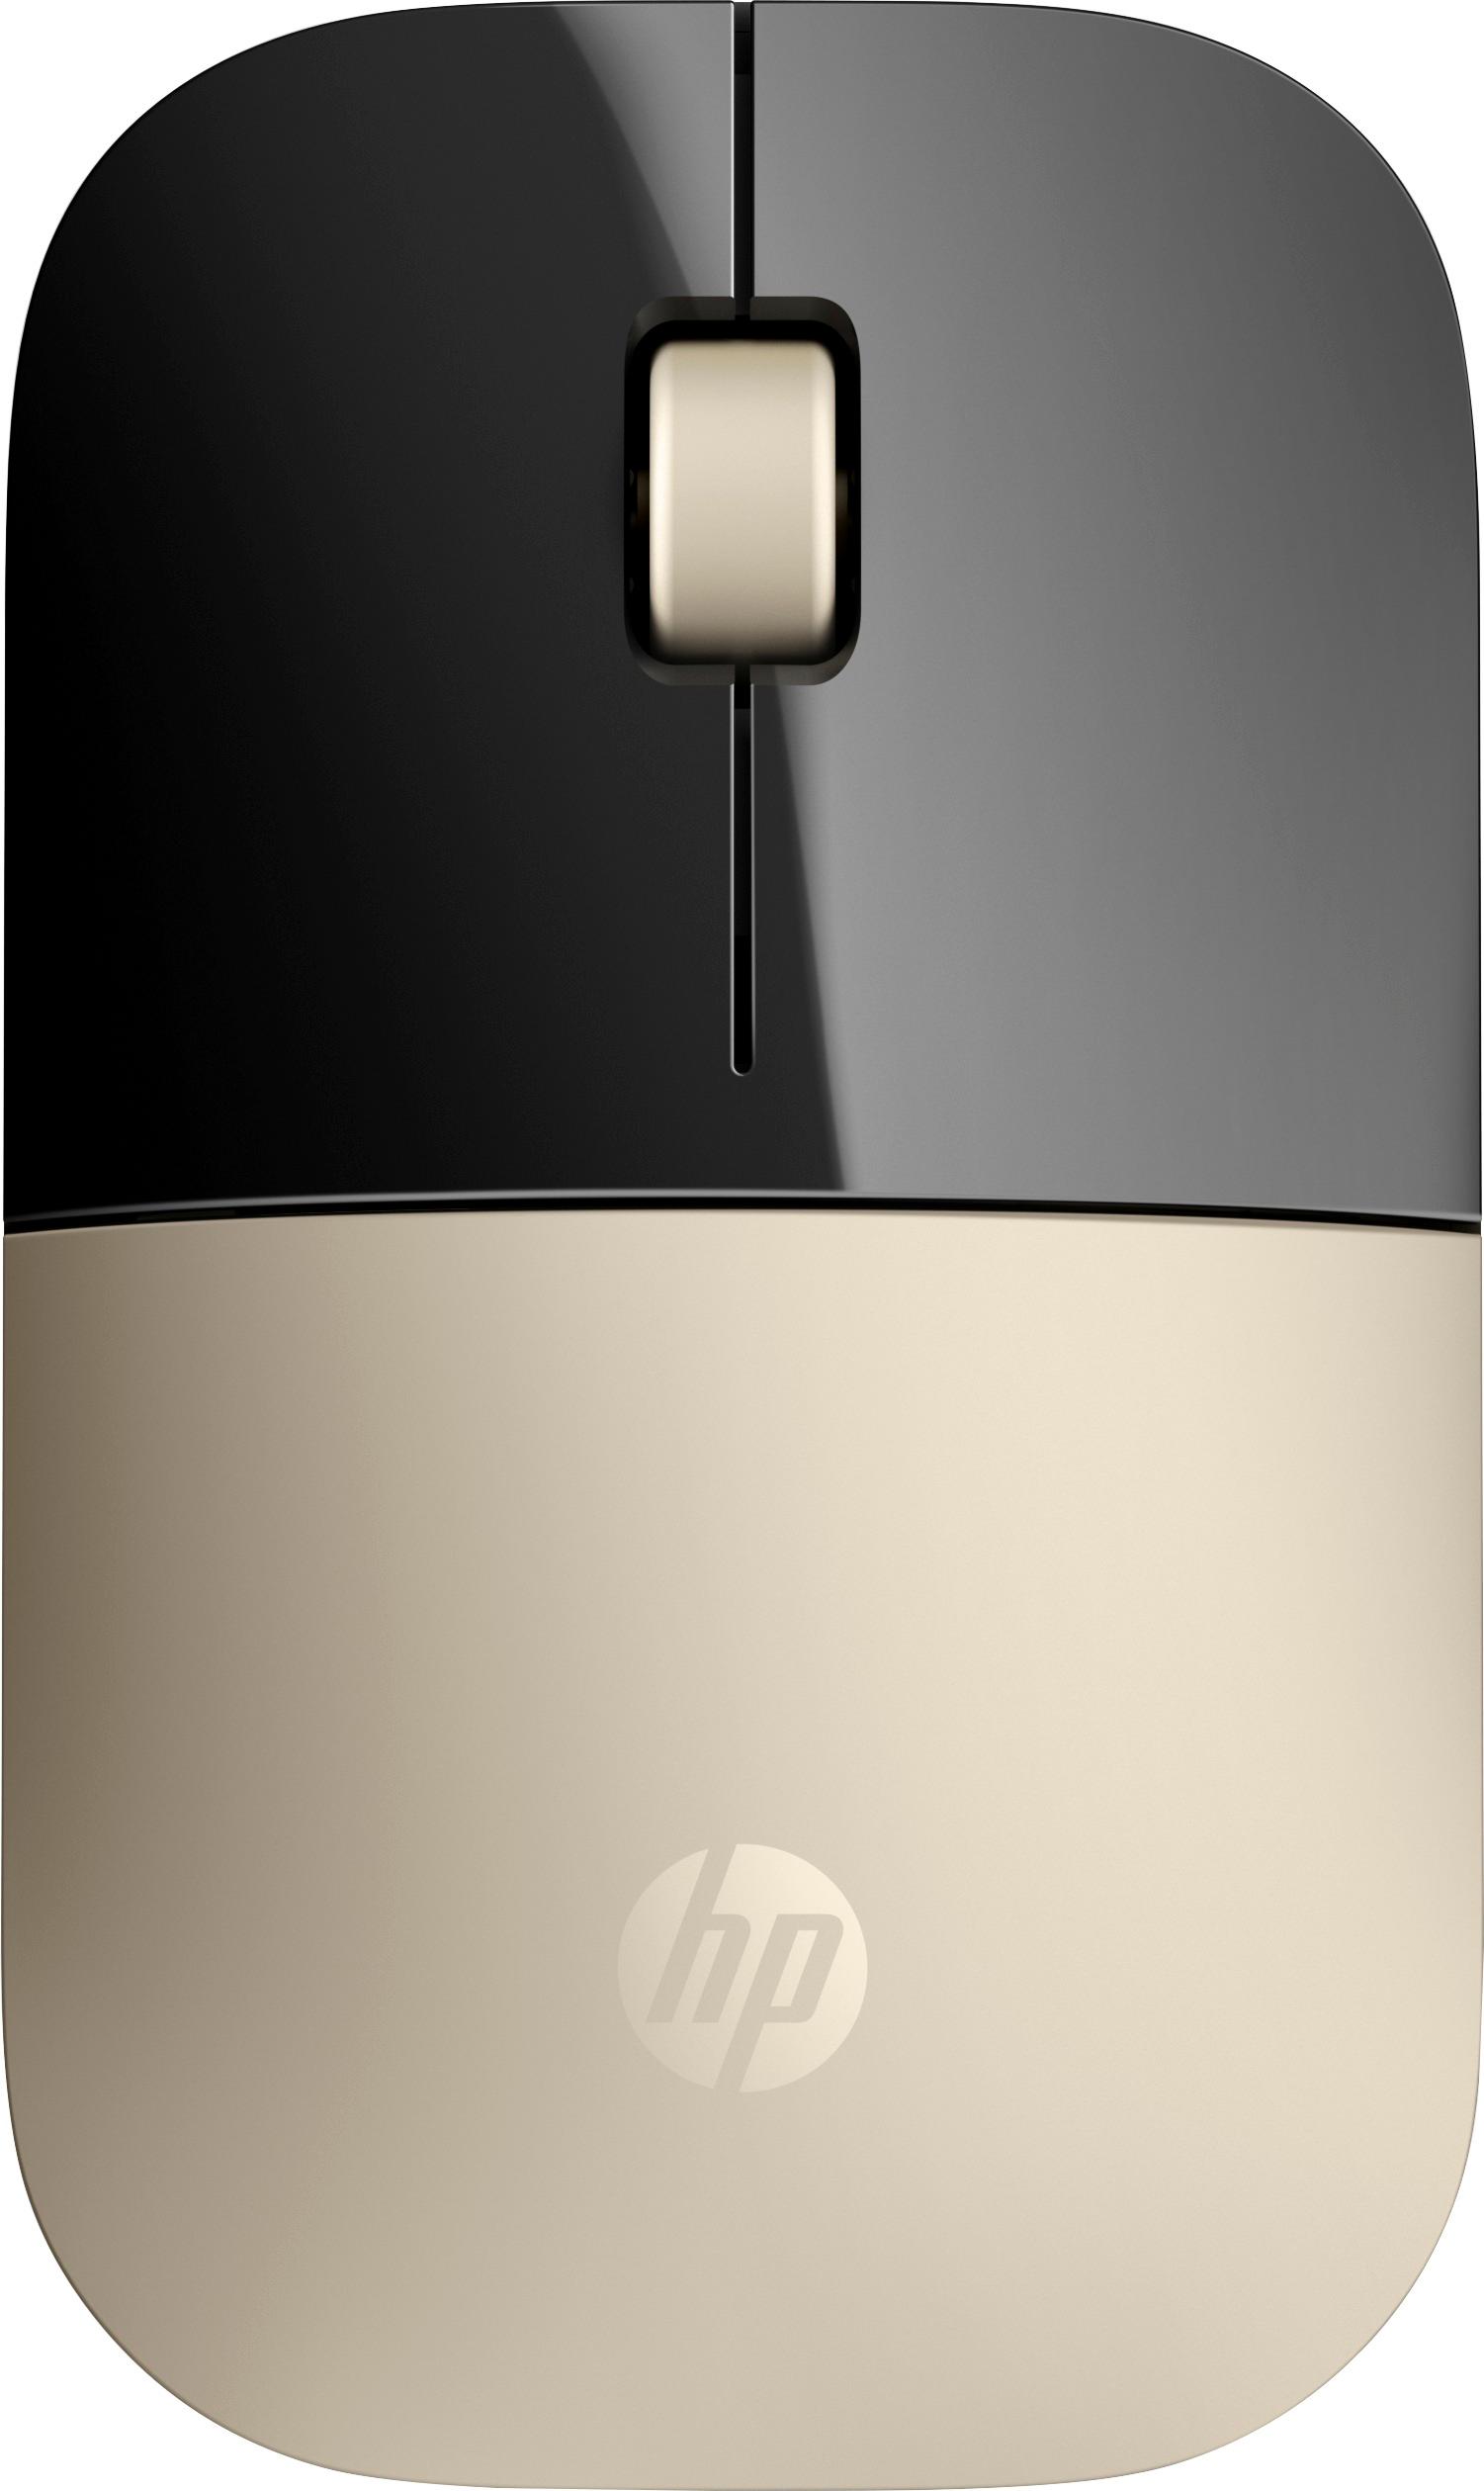 HP Z3700 Gold Buy Z3700 Wireless LED - Best X7Q43AA#ABL Blue Mouse